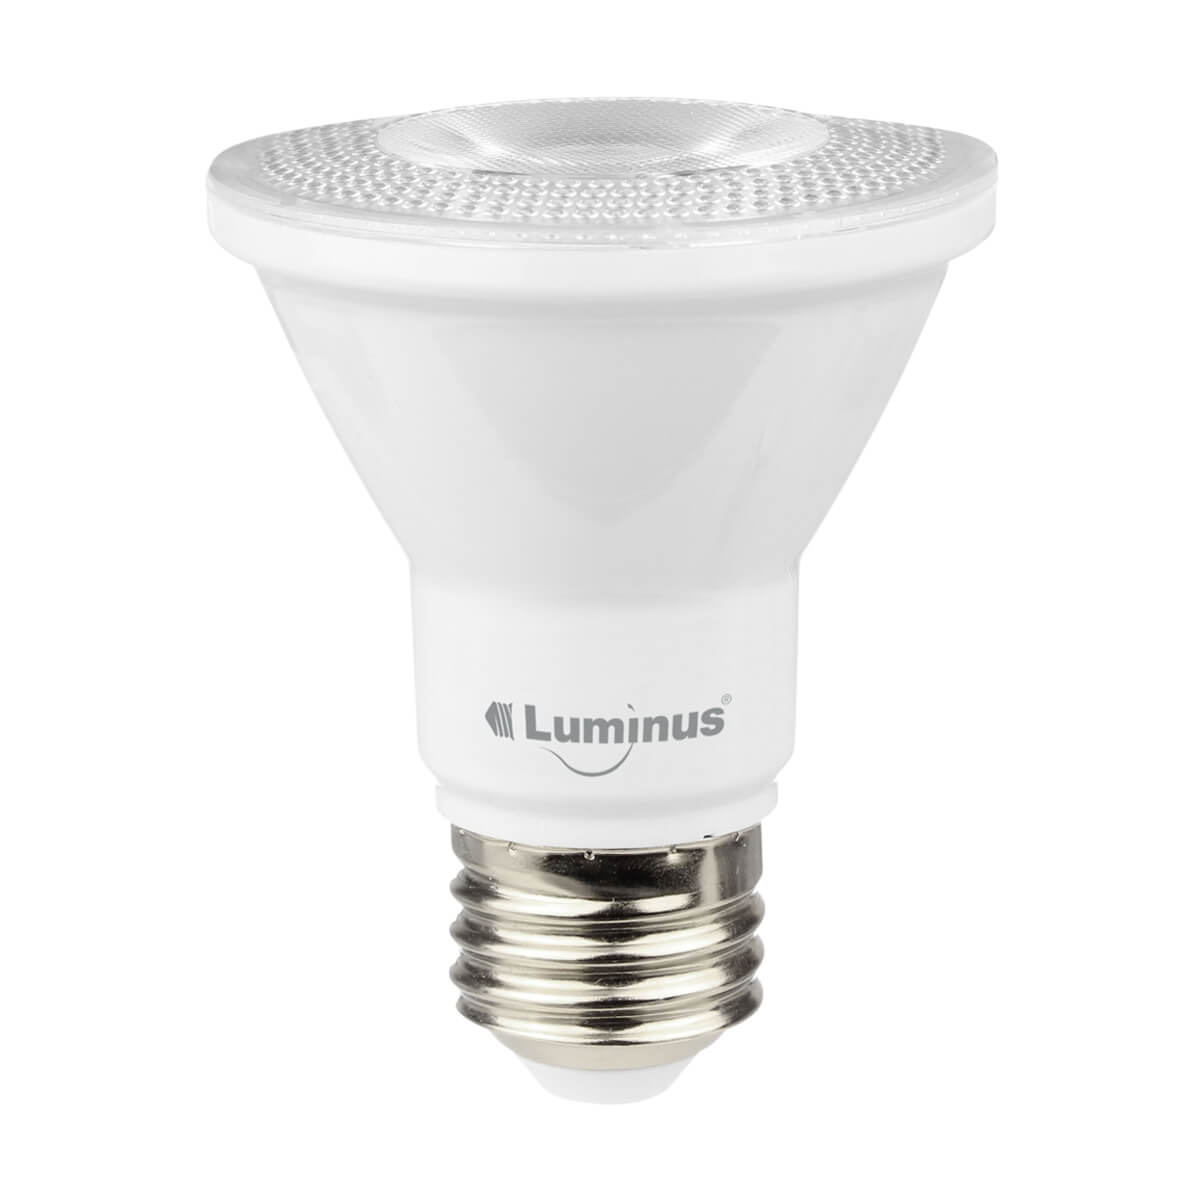 Luminus LED 7W PAR20 3000K - 2 Pack